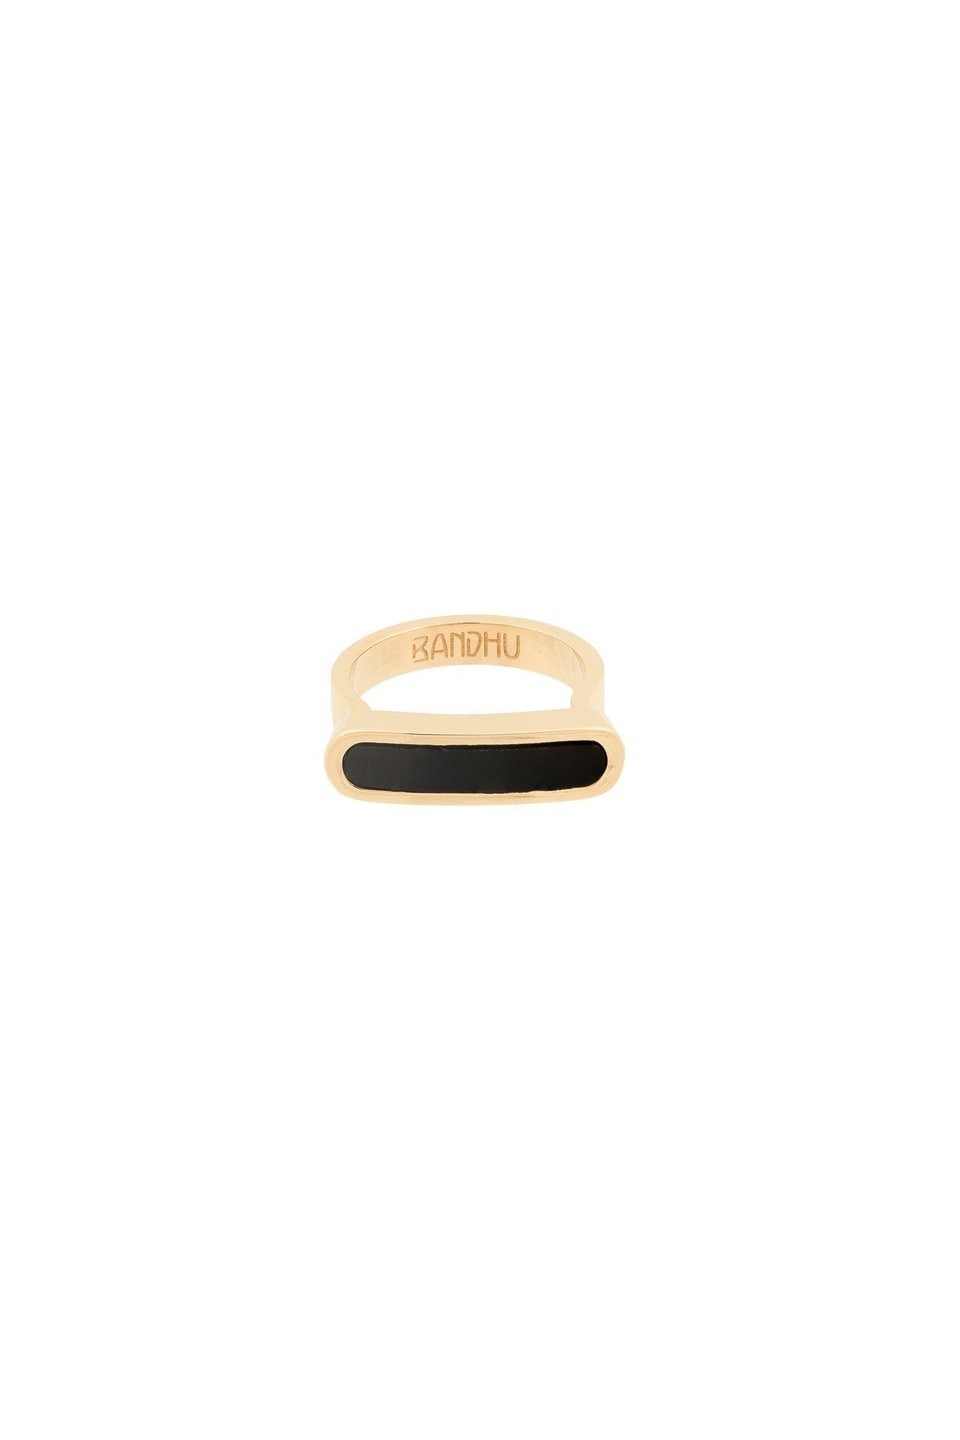 Bandhu Energy Muse Ring - Gold with Black Onyx